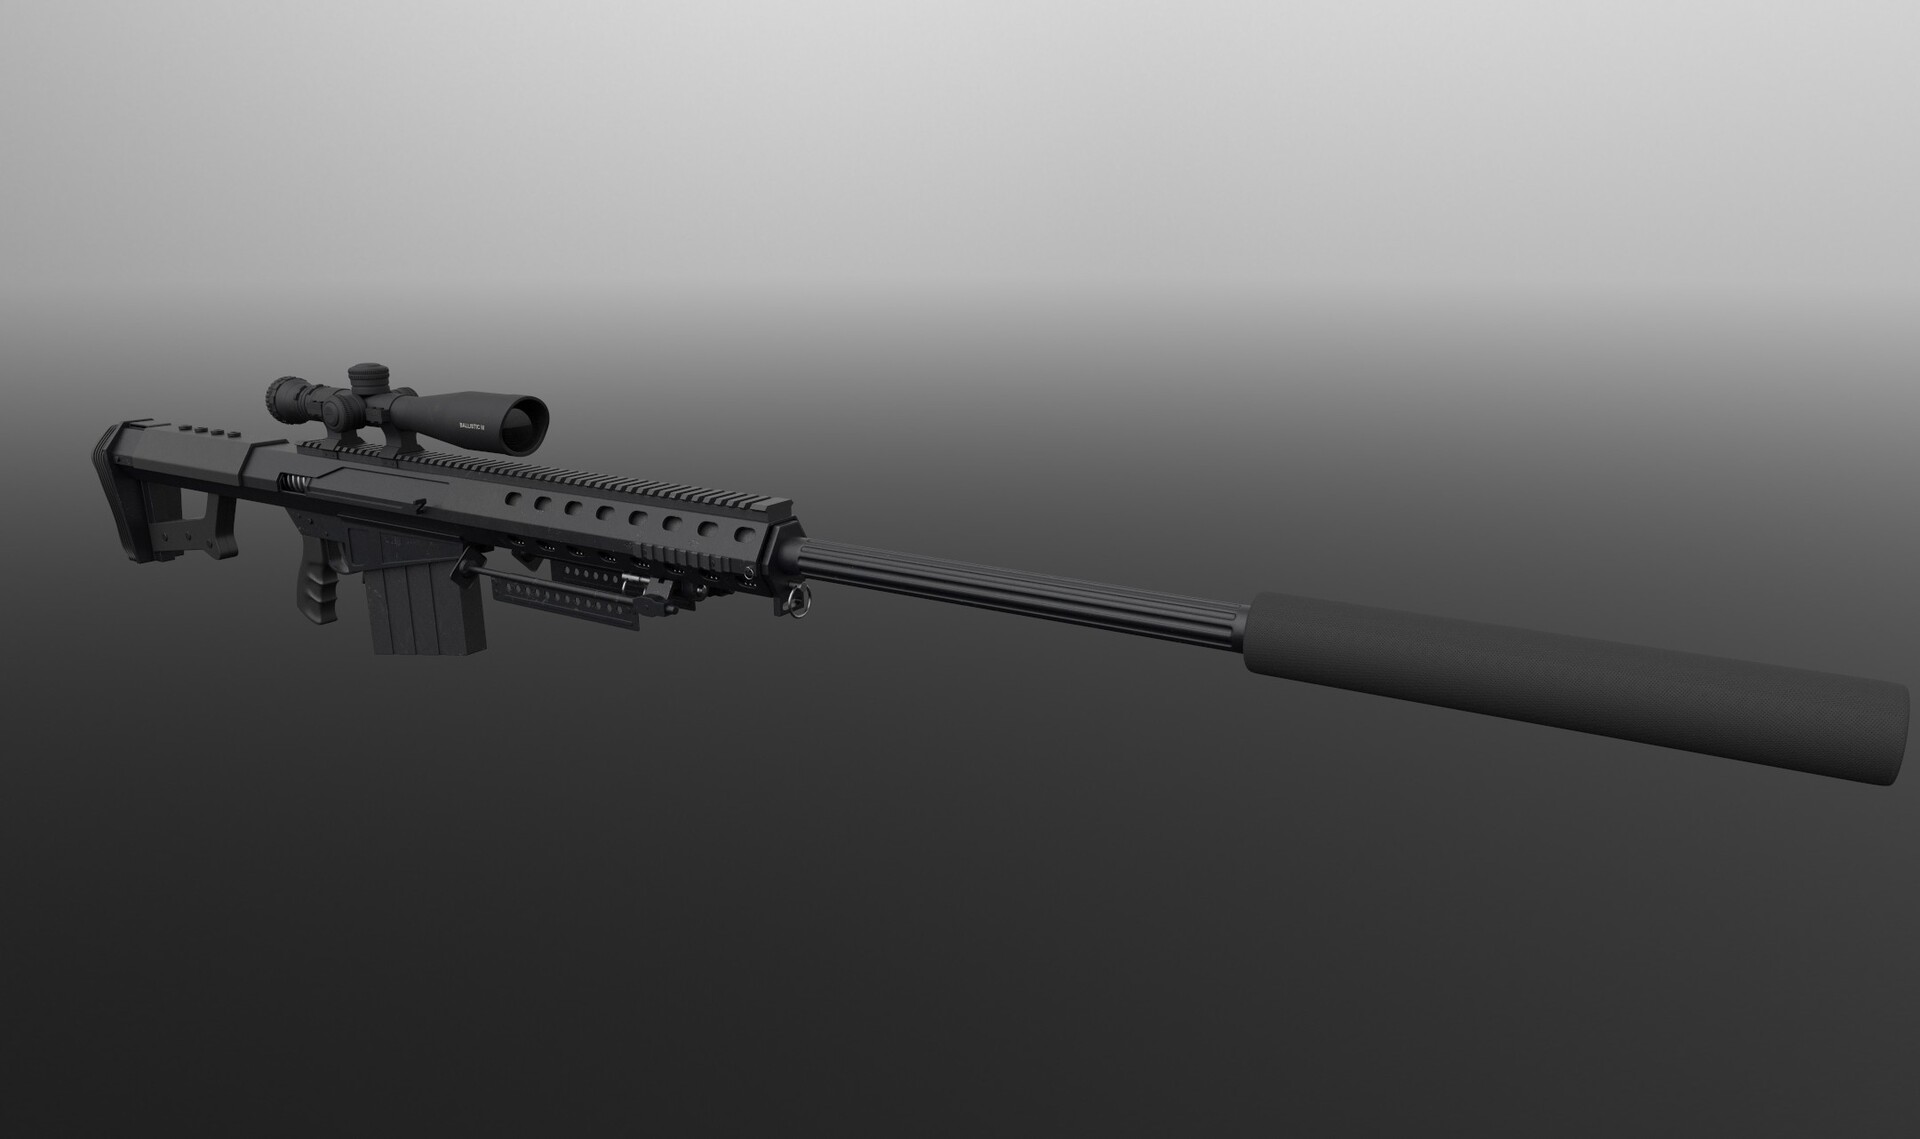 ArtStation - Barret M82 weapon